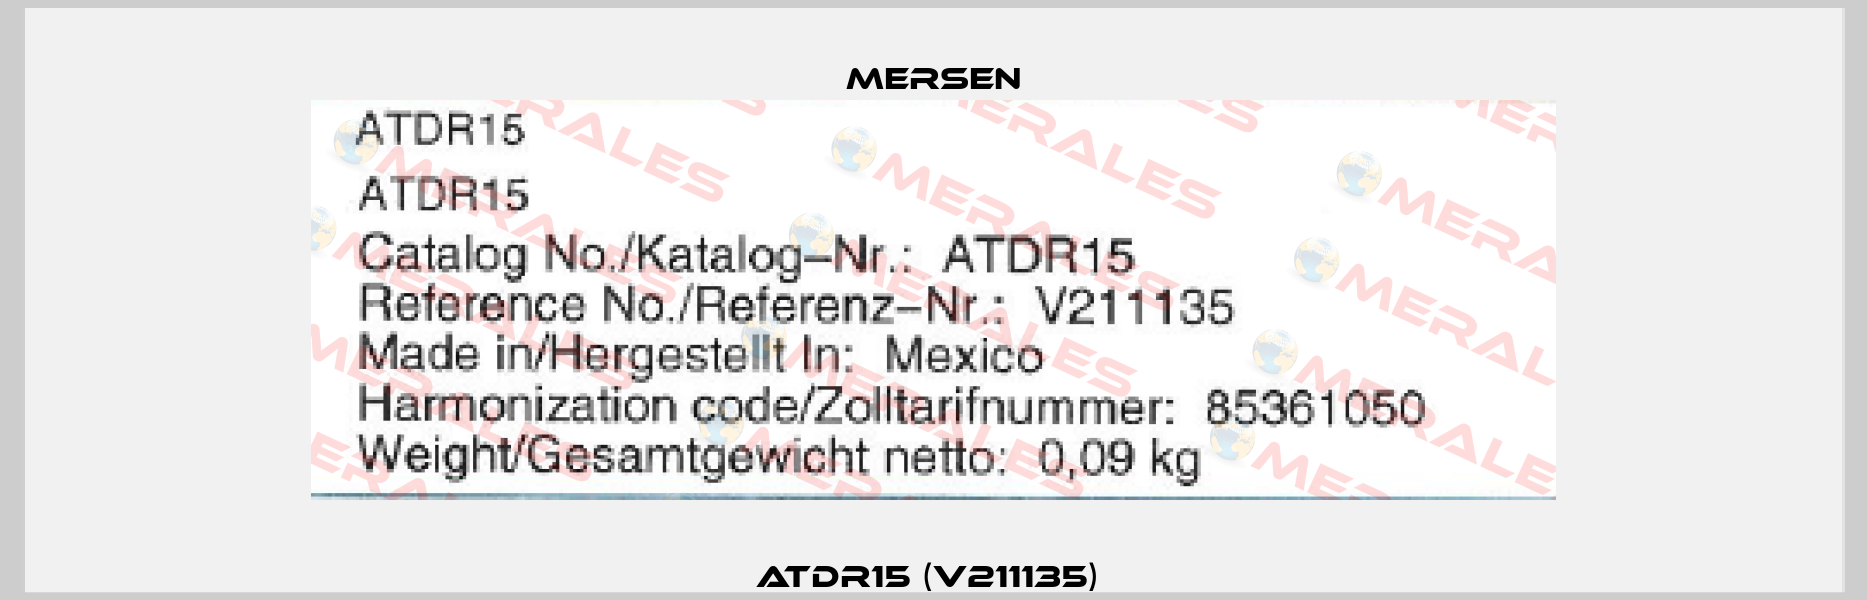 ATDR15 (V211135)  Mersen